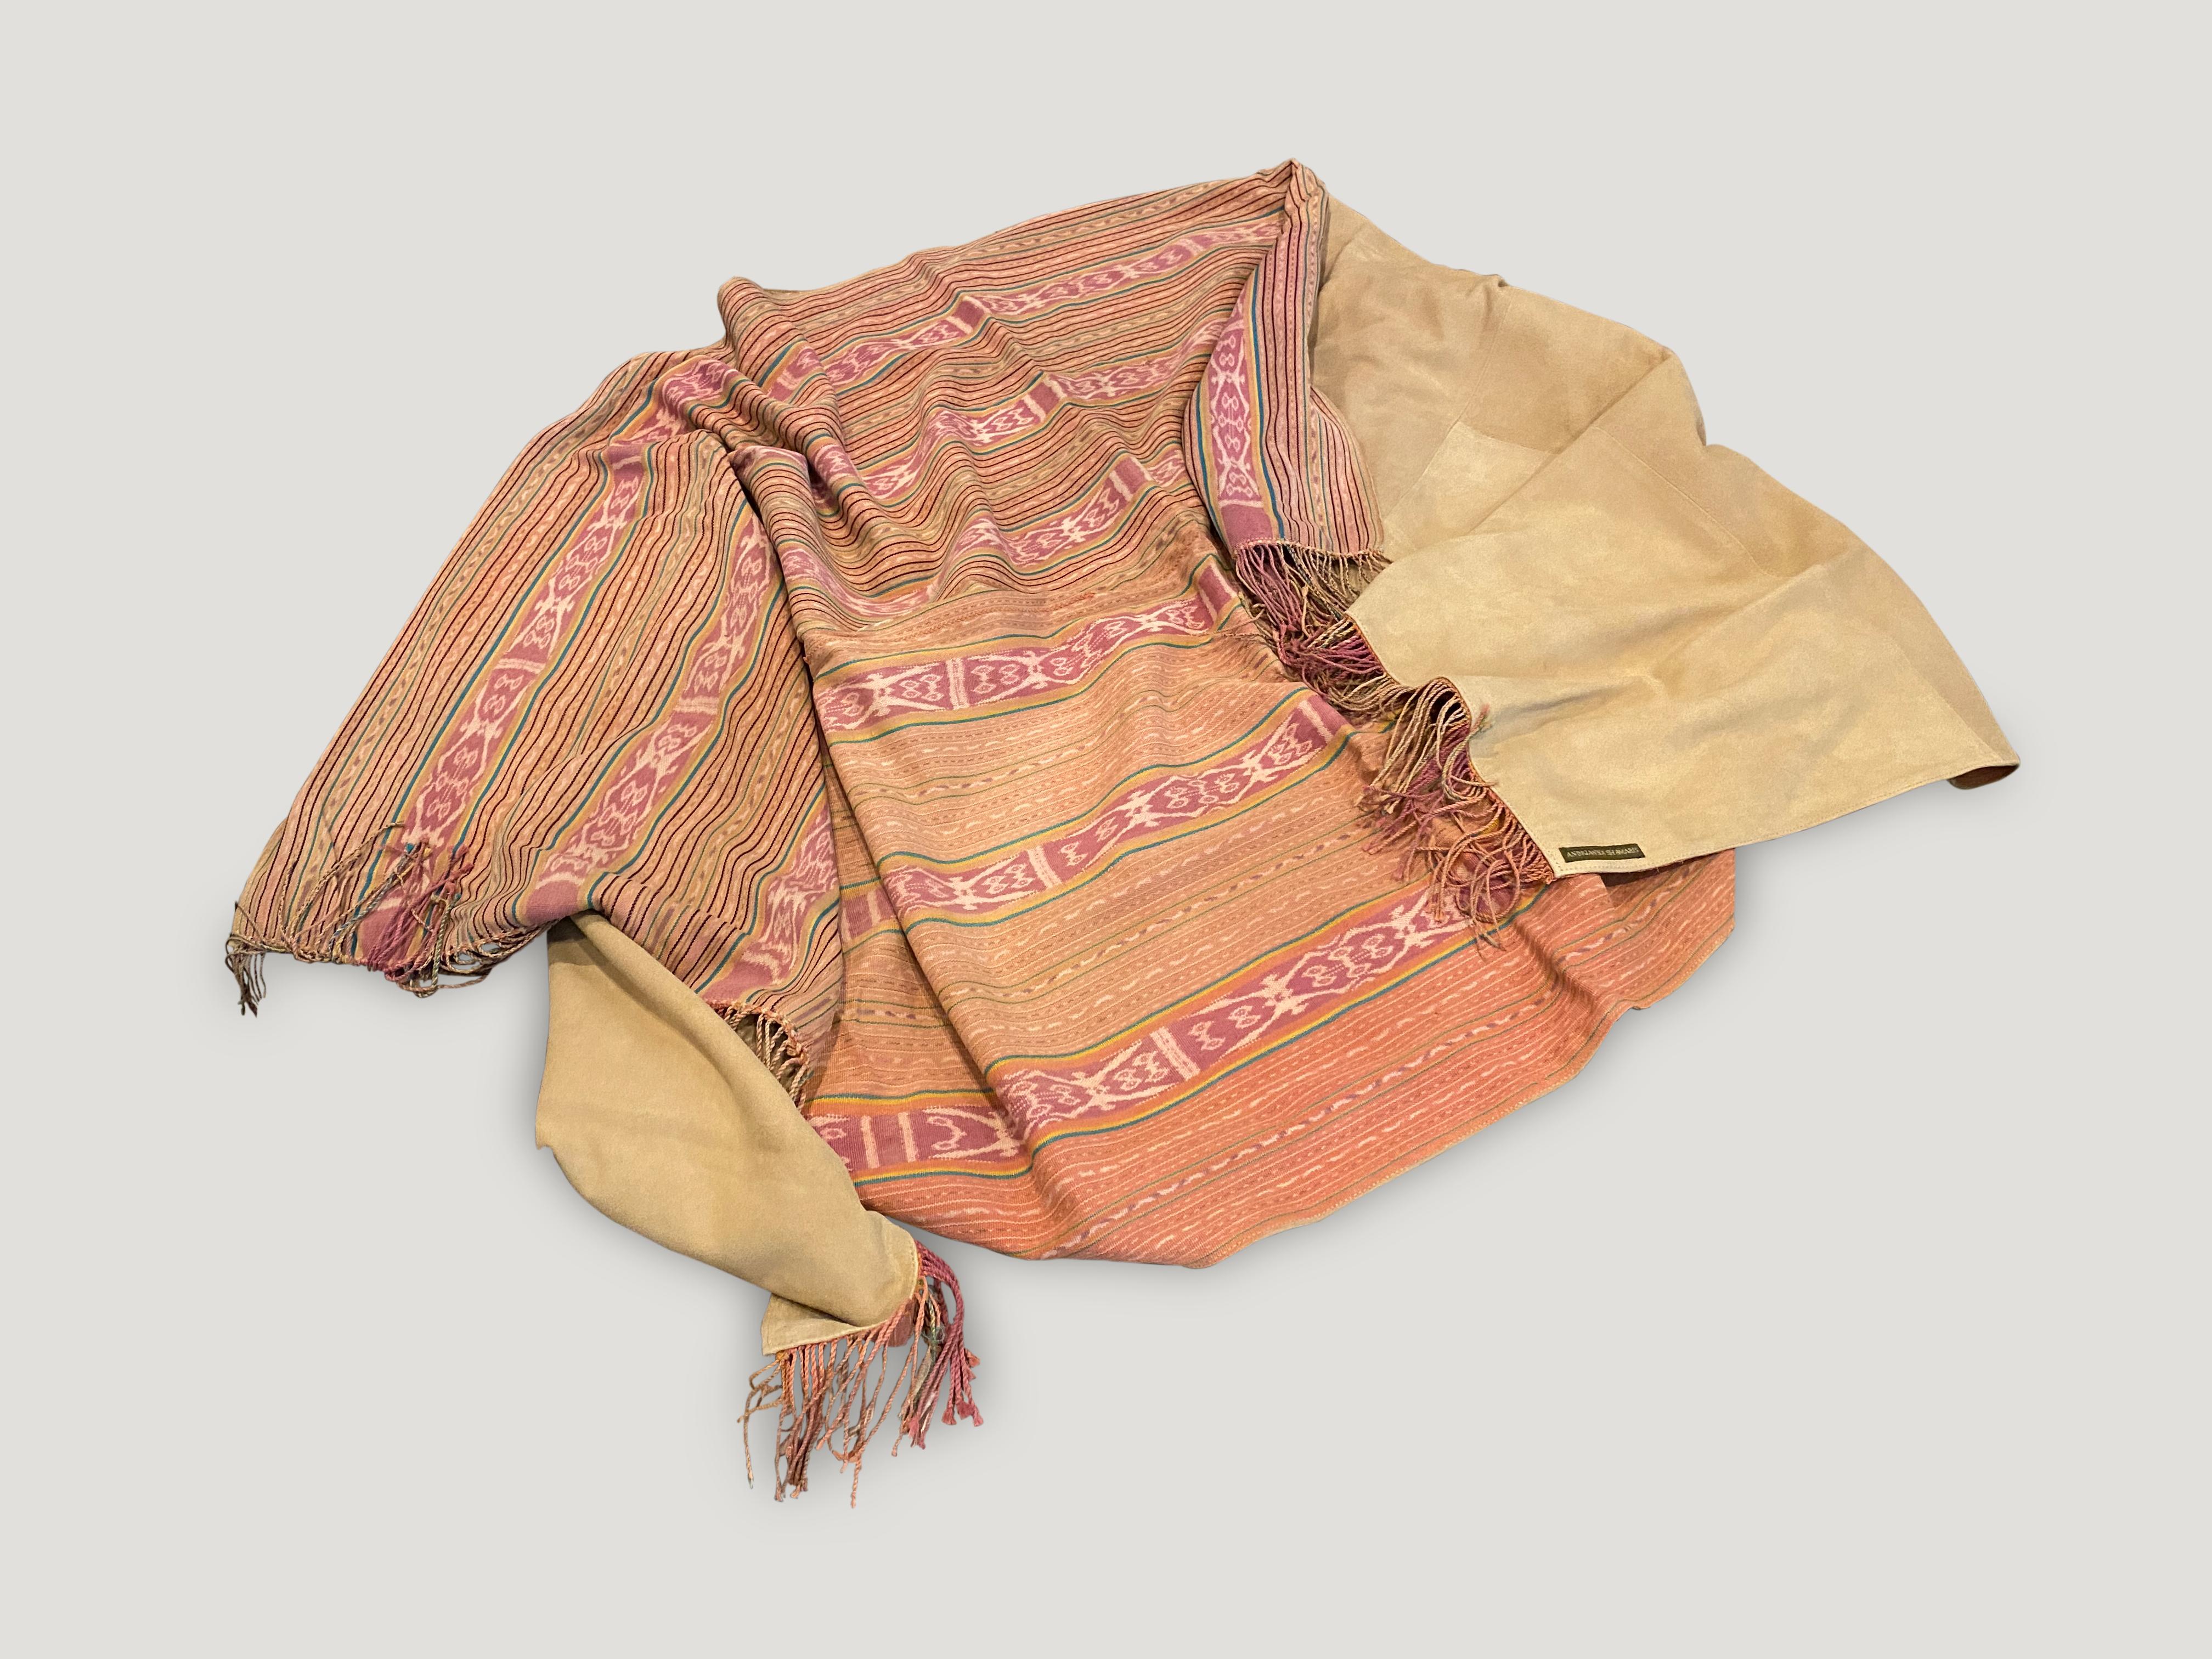 Primitive Andrianna Shamaris Antique Textile Backed in Suede